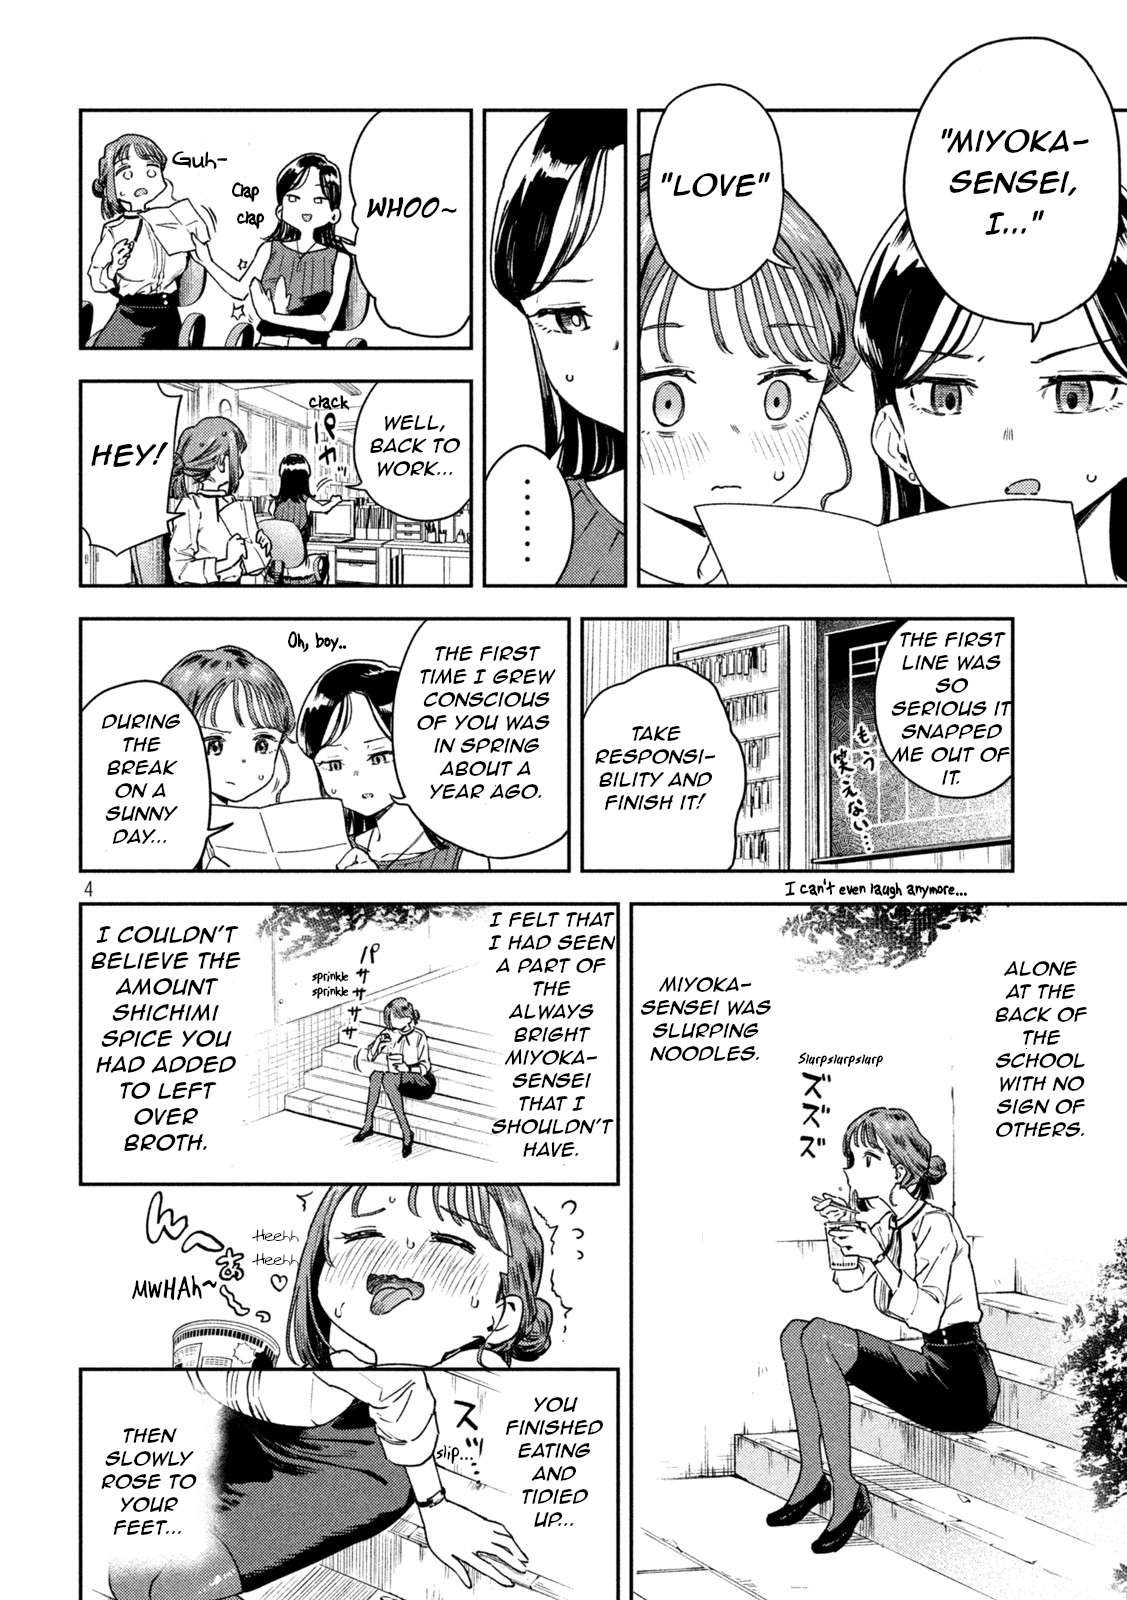 Miyo-Chan Sensei Said So - chapter 5 - #4